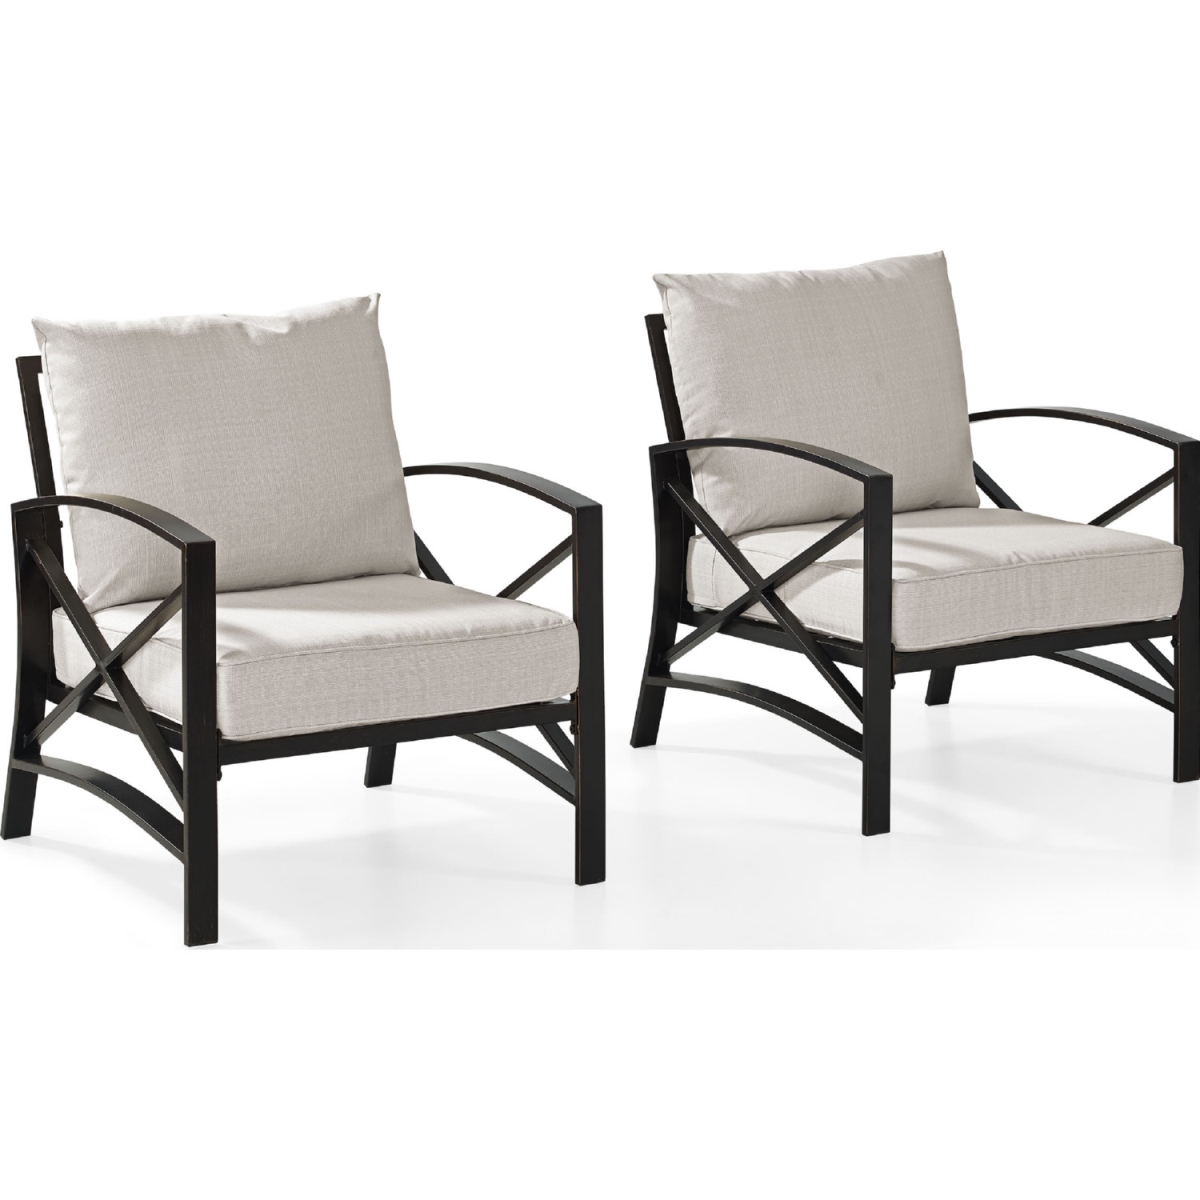 Ko60013bz-ol 2 Piece Kaplan Outdoor Seating Set With Oatmeal Cushion - Two Kaplan Outdoor Chairs